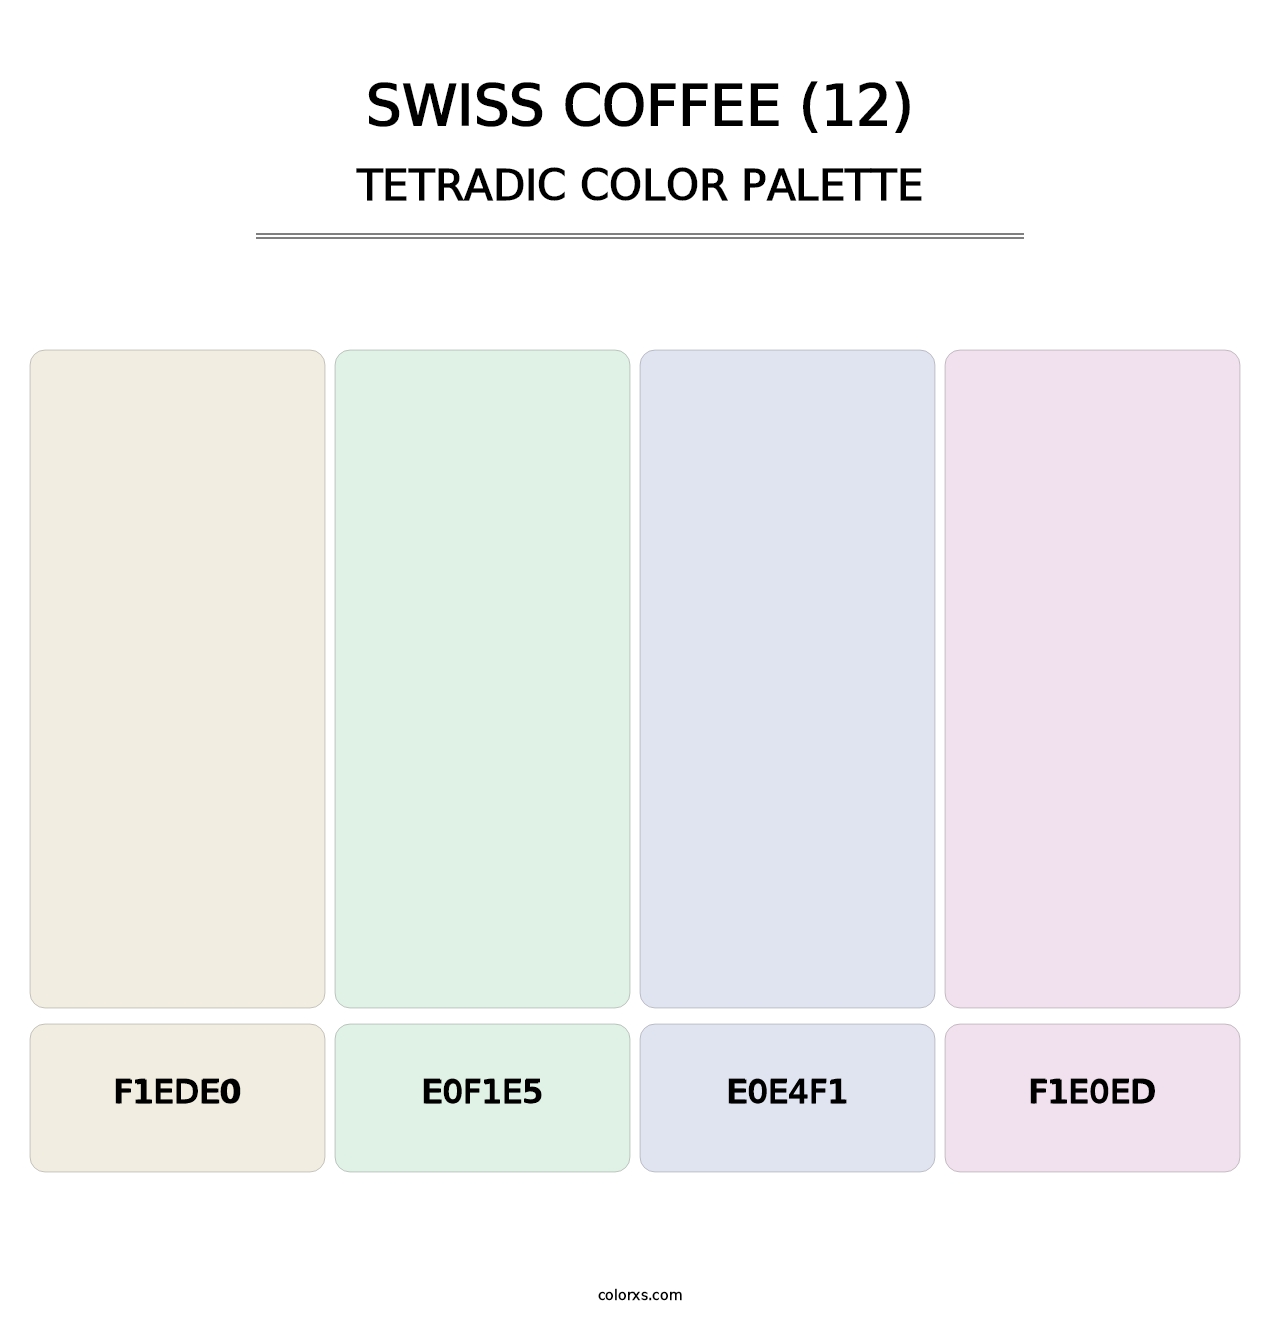 Swiss Coffee (12) - Tetradic Color Palette